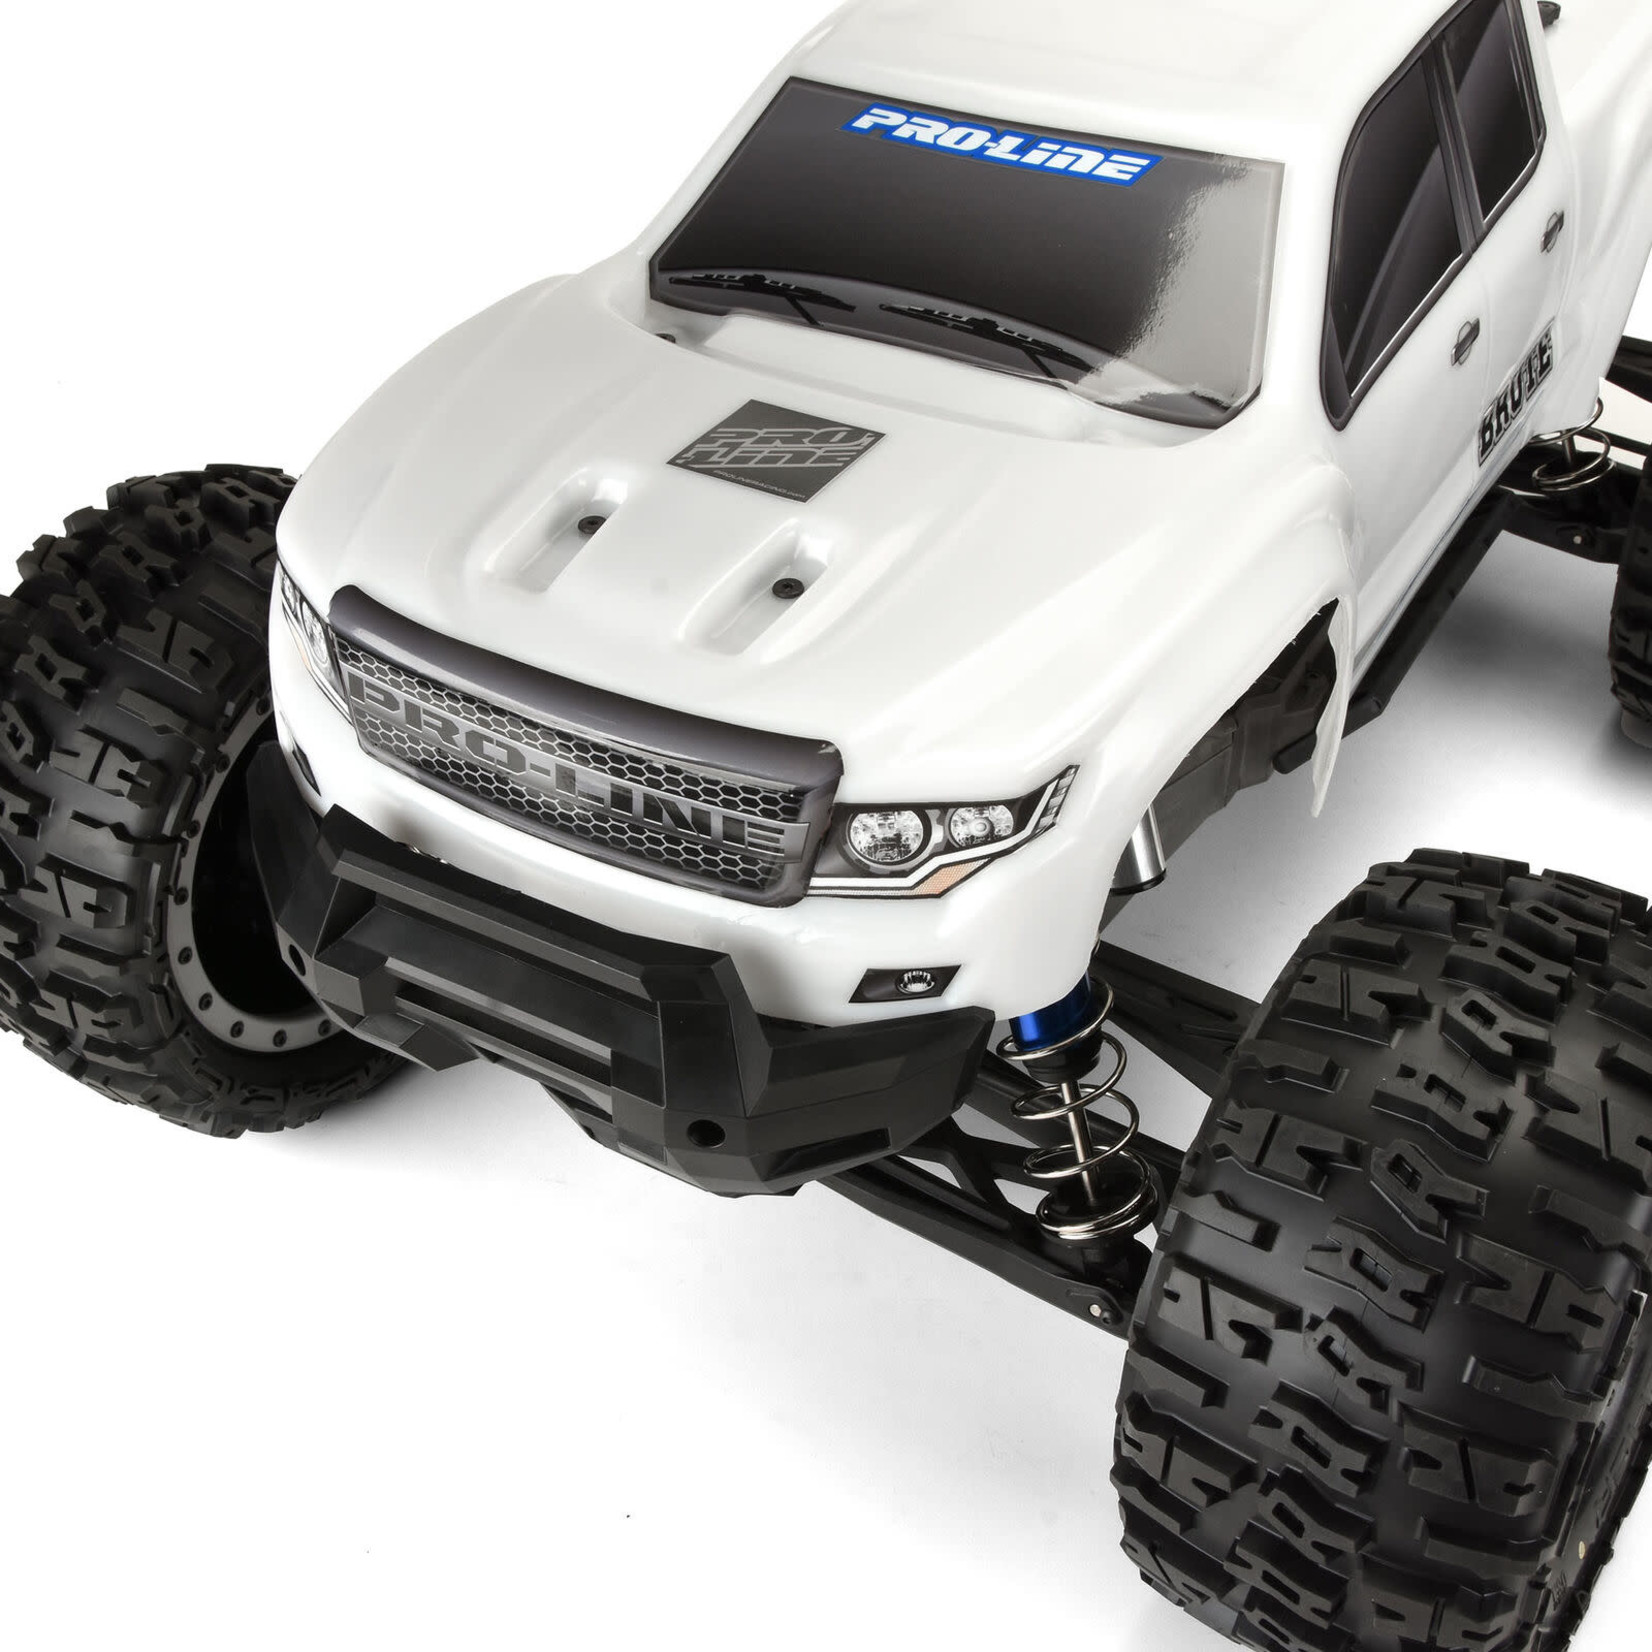 Pro-Line Pro-Line Bash Armor Pre-Cut Monster Truck Body (White) (X-Maxx) #3513-17